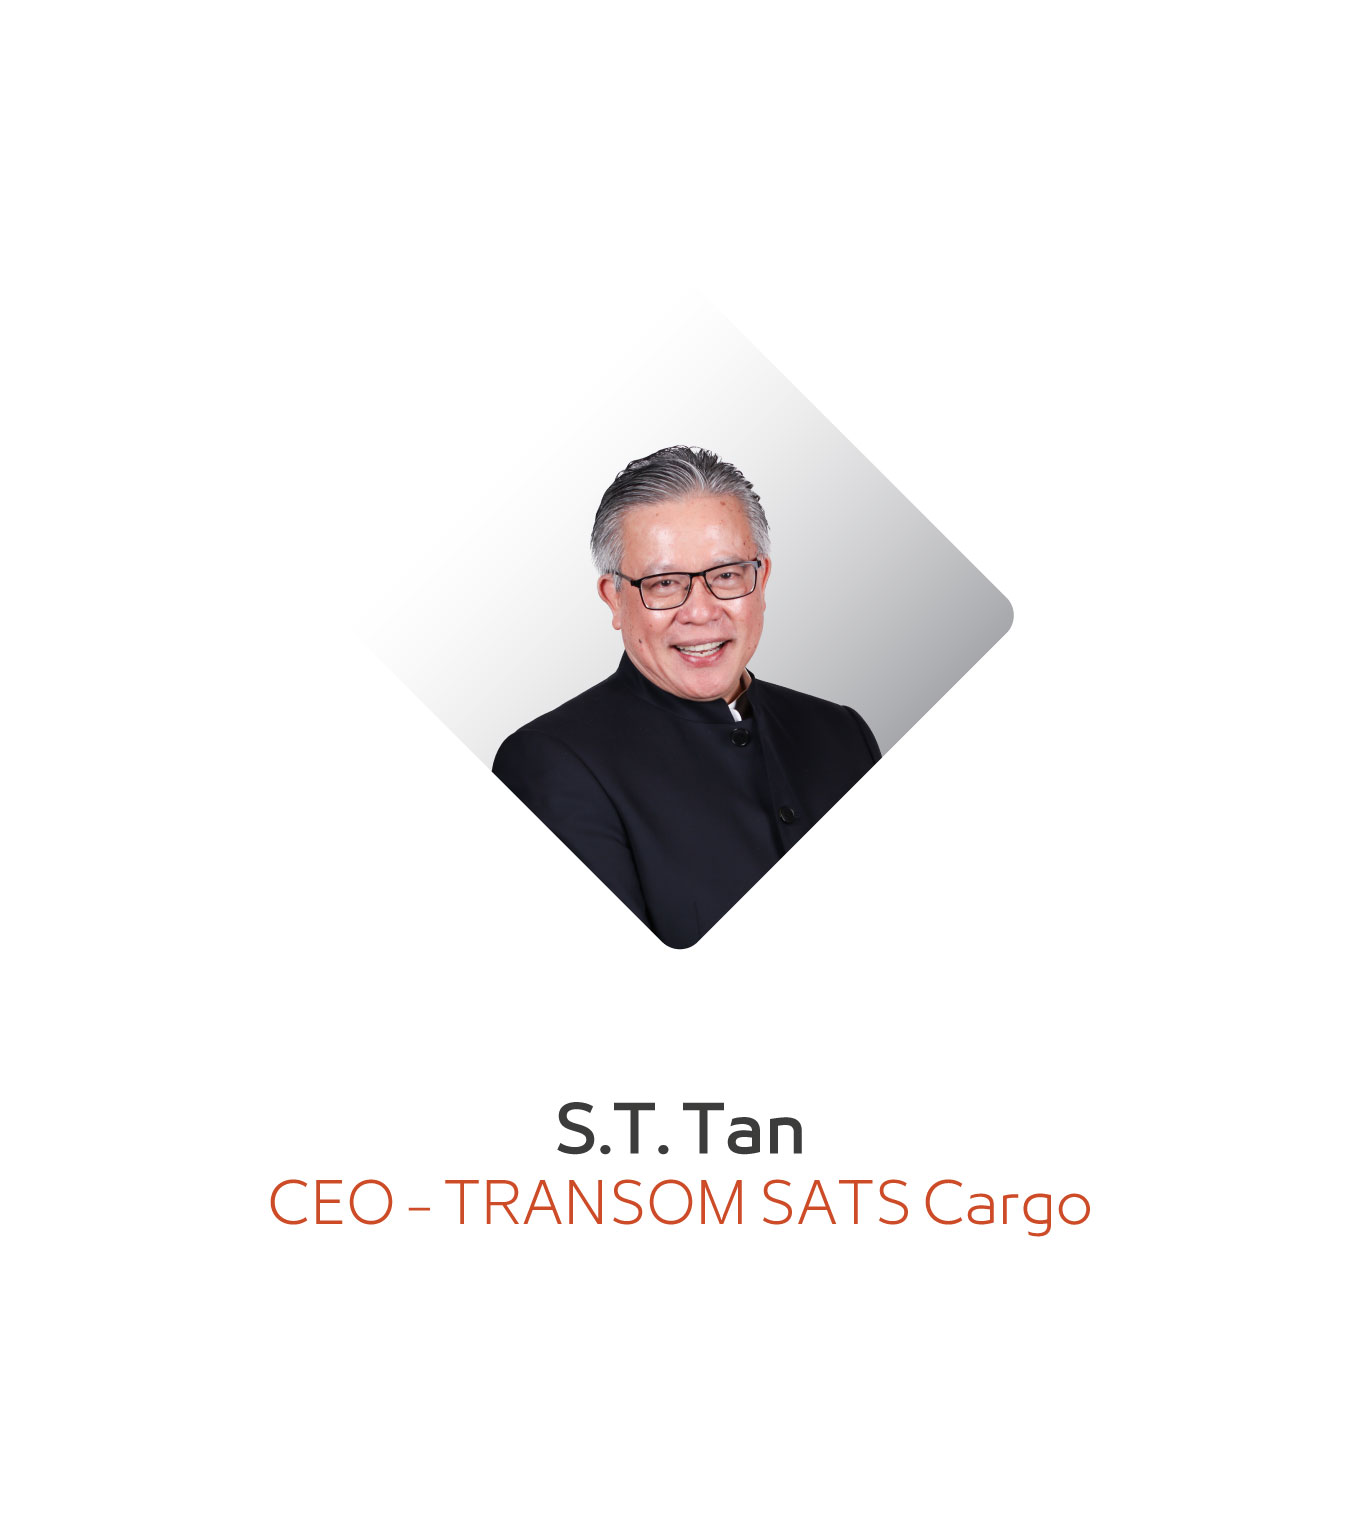 CEO - Transomsats Cargo